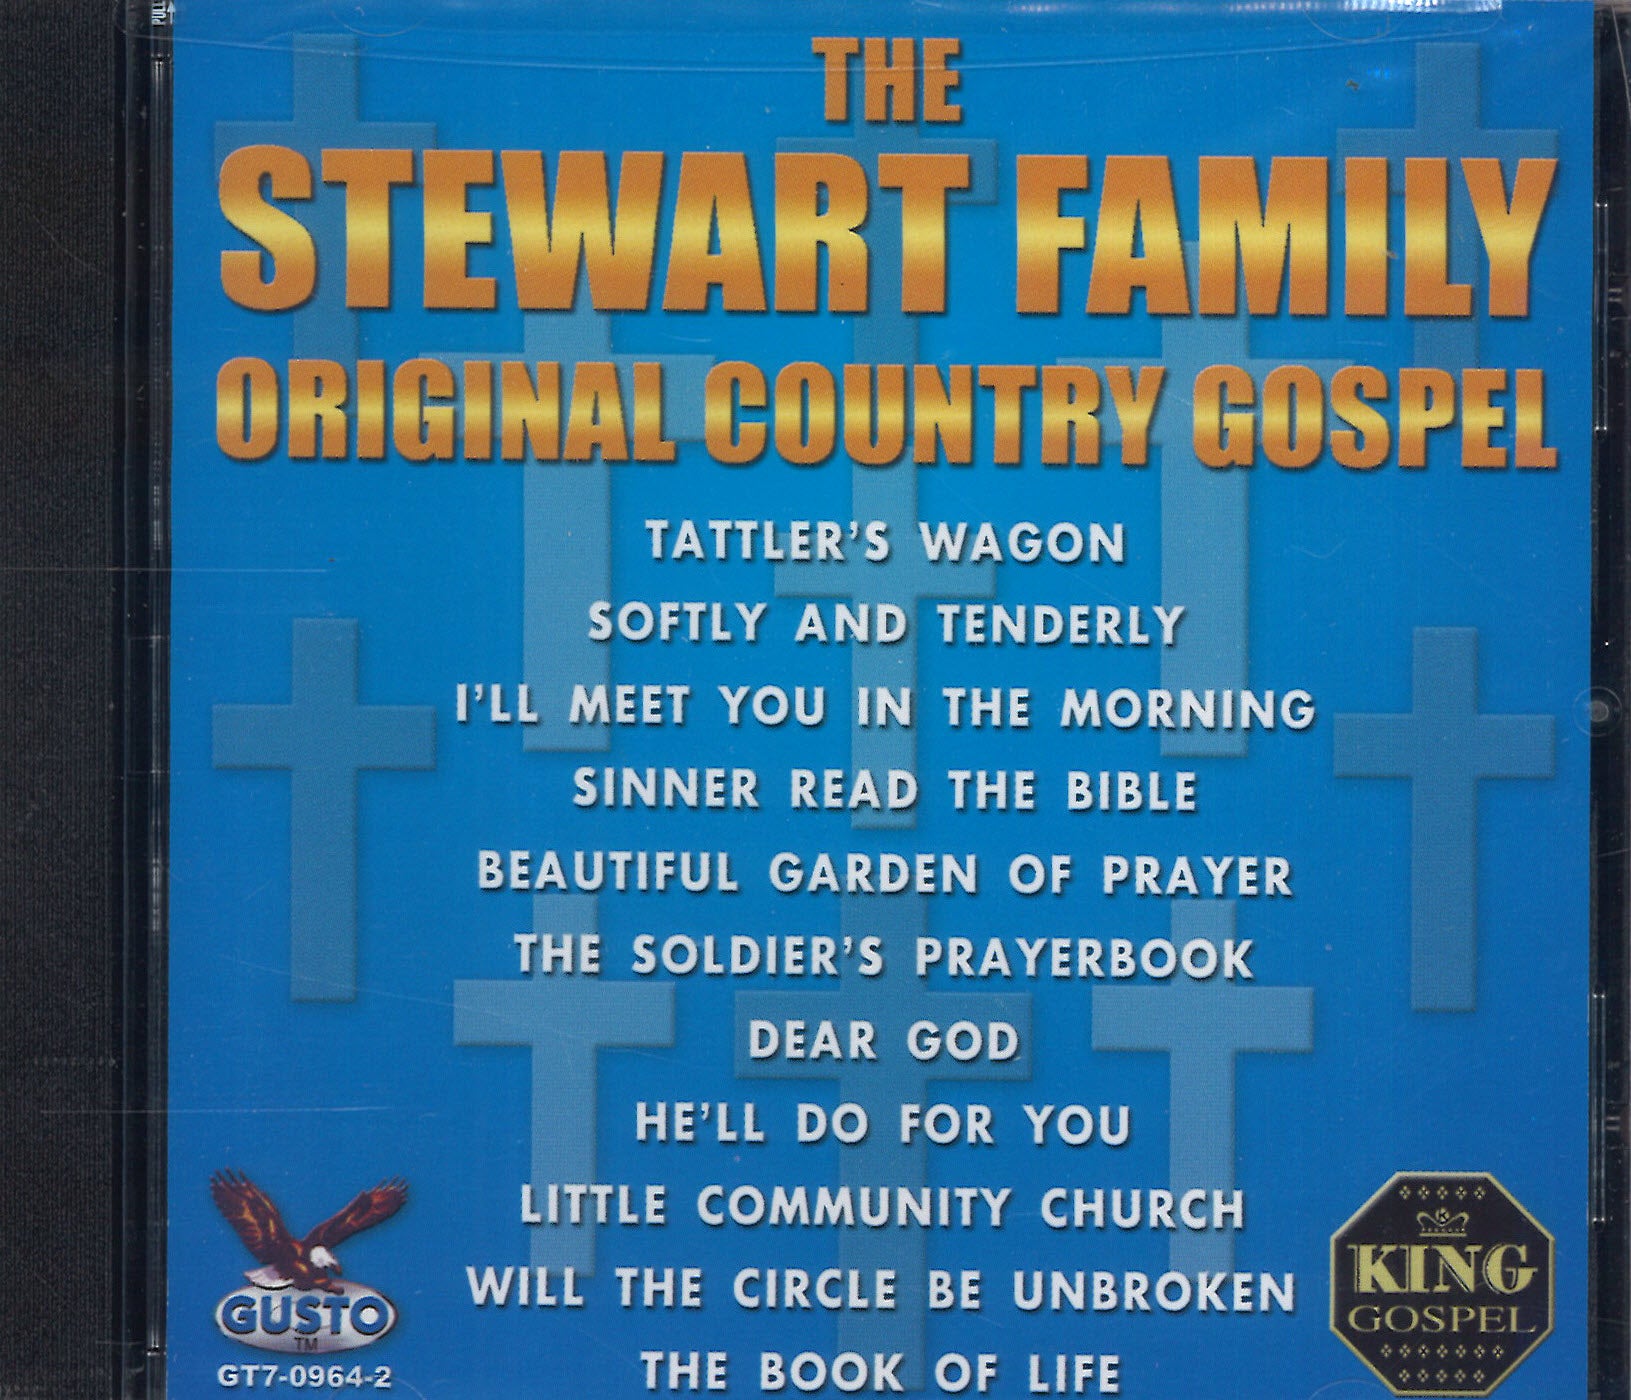 The Stewart Family Original Country Gospel